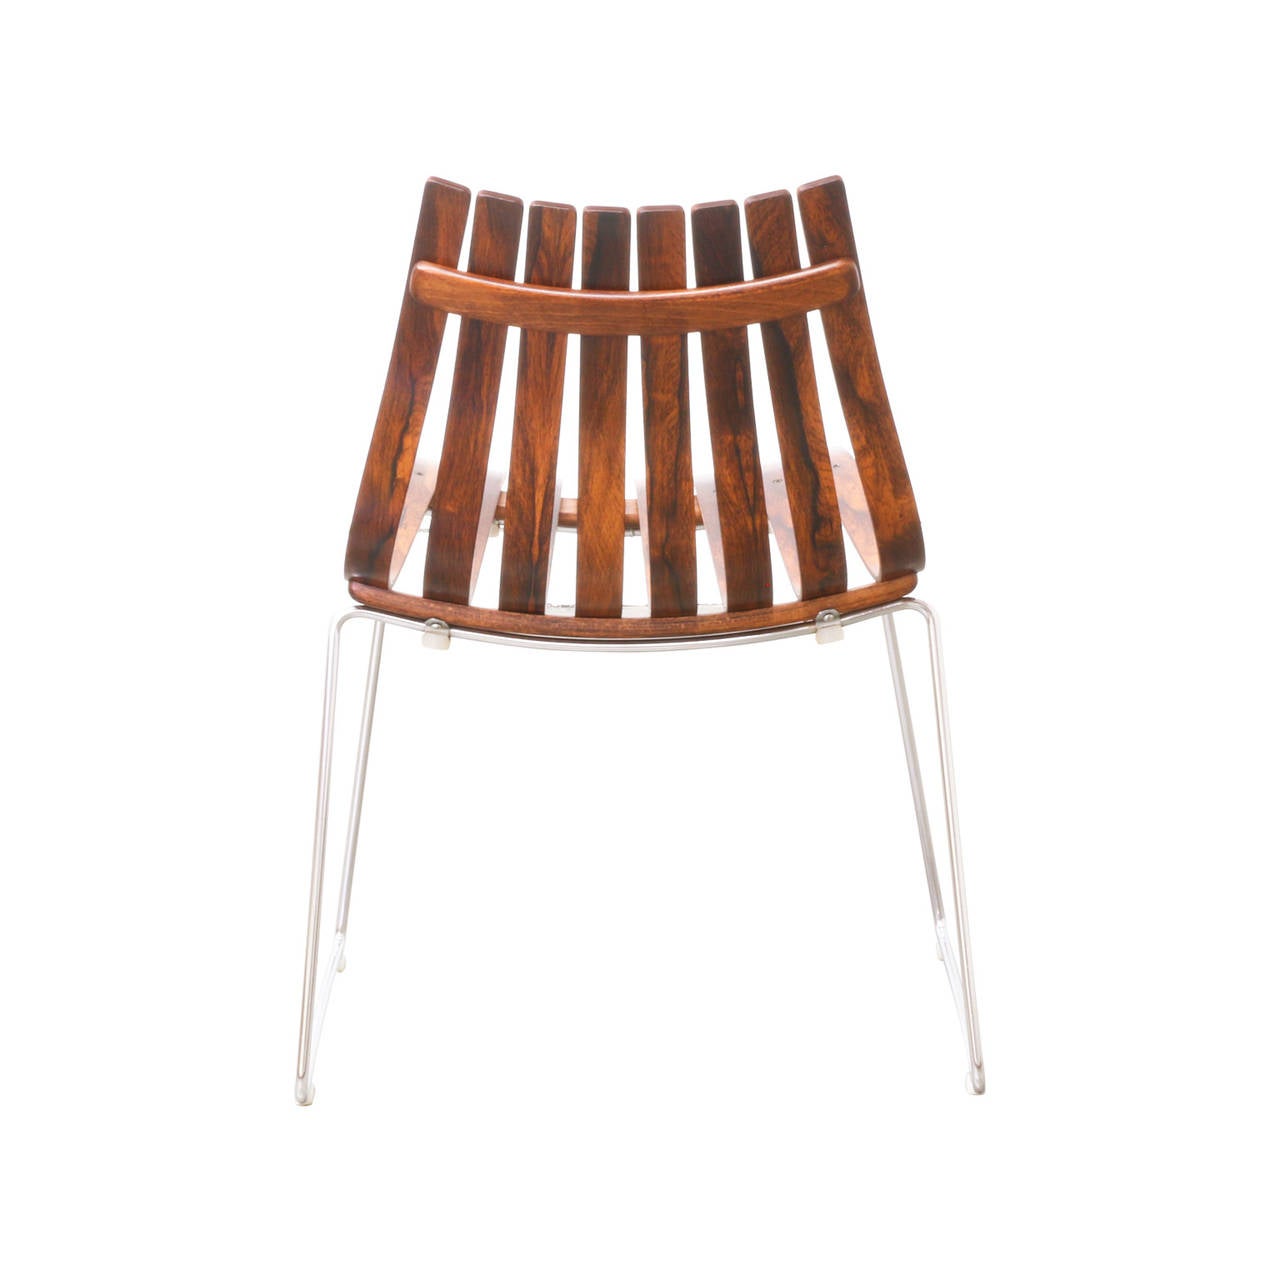 Scandinavian Modern Hans Brattrud “Scandia” Rosewood Chair for Hove Mobler